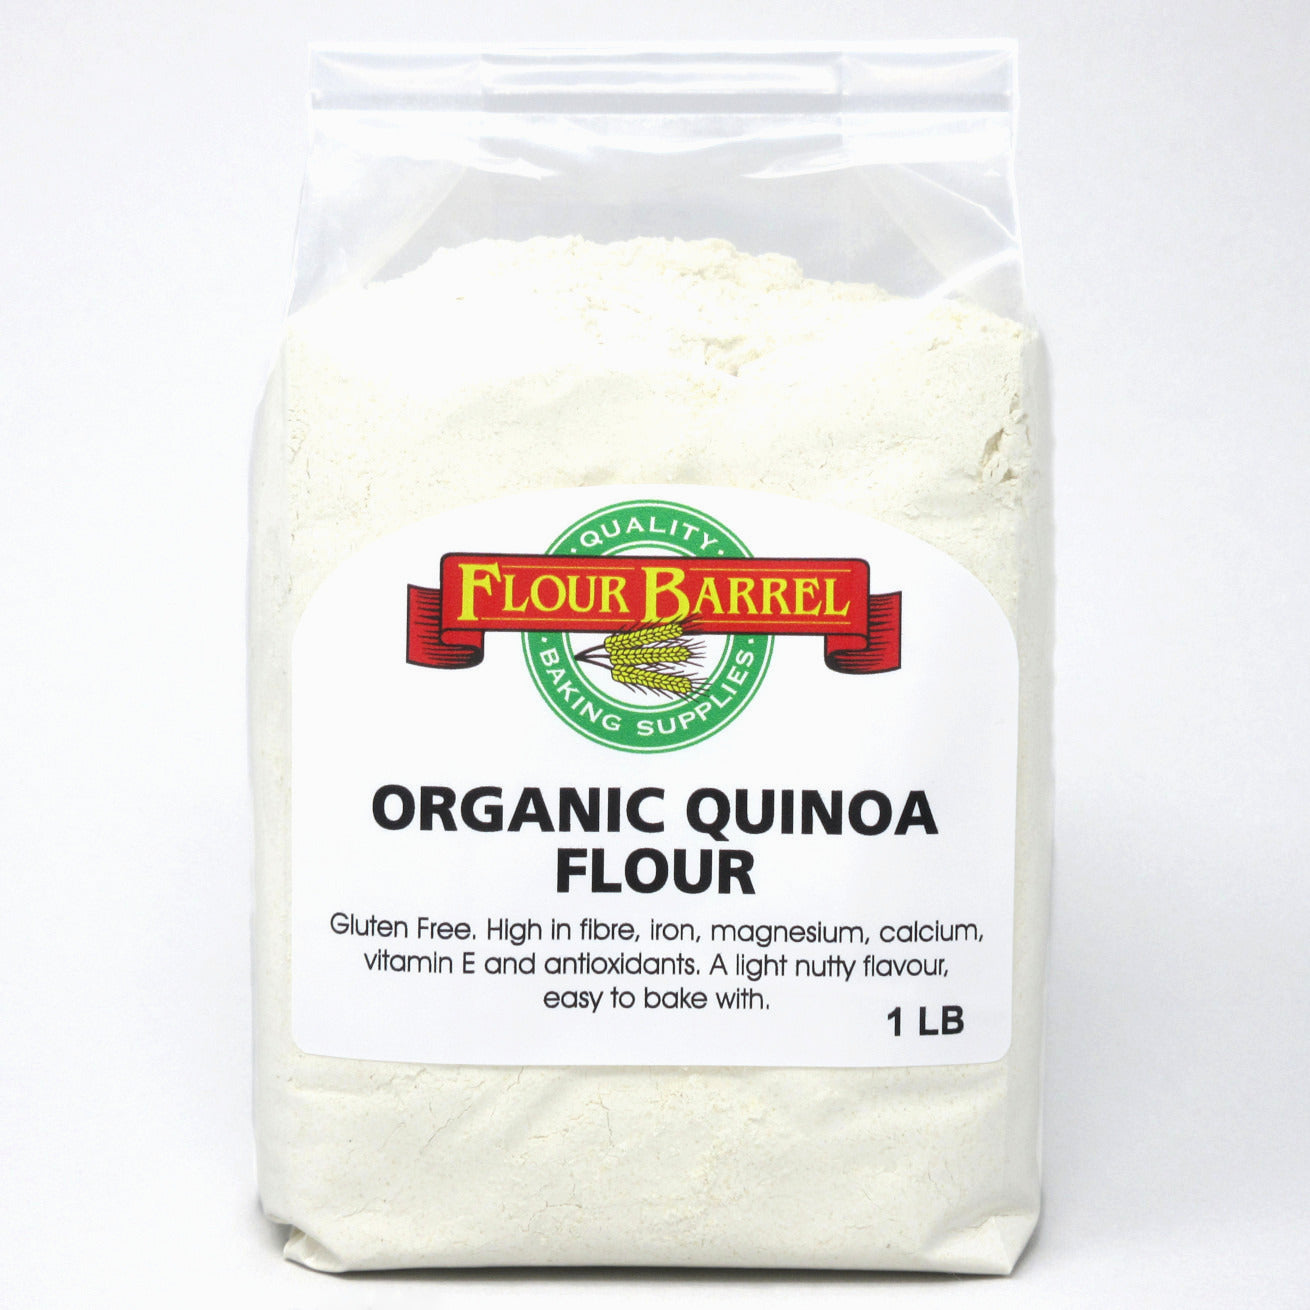 Flour Barrel product image - Organic Quinoa Flour